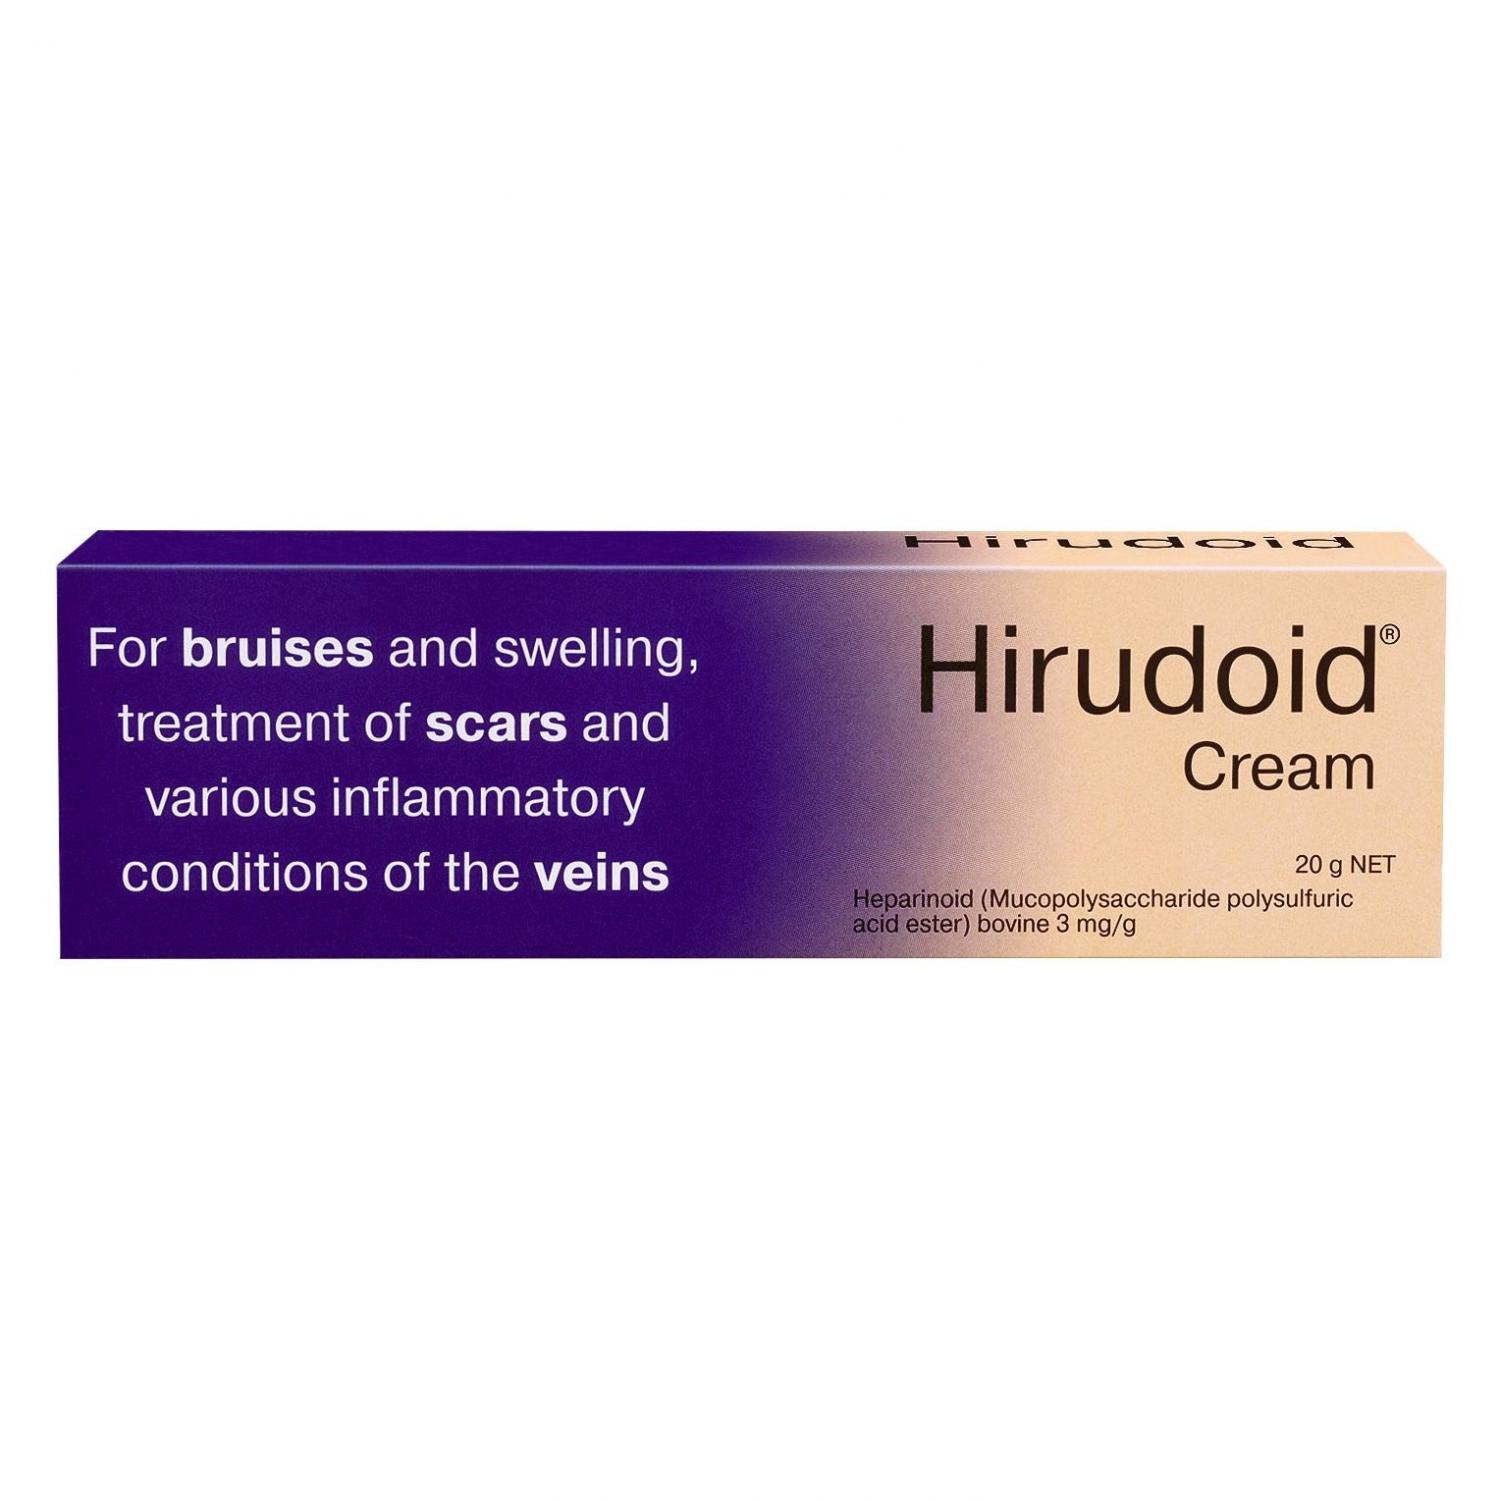 Thumbnail for Hirudoid Cream 20g